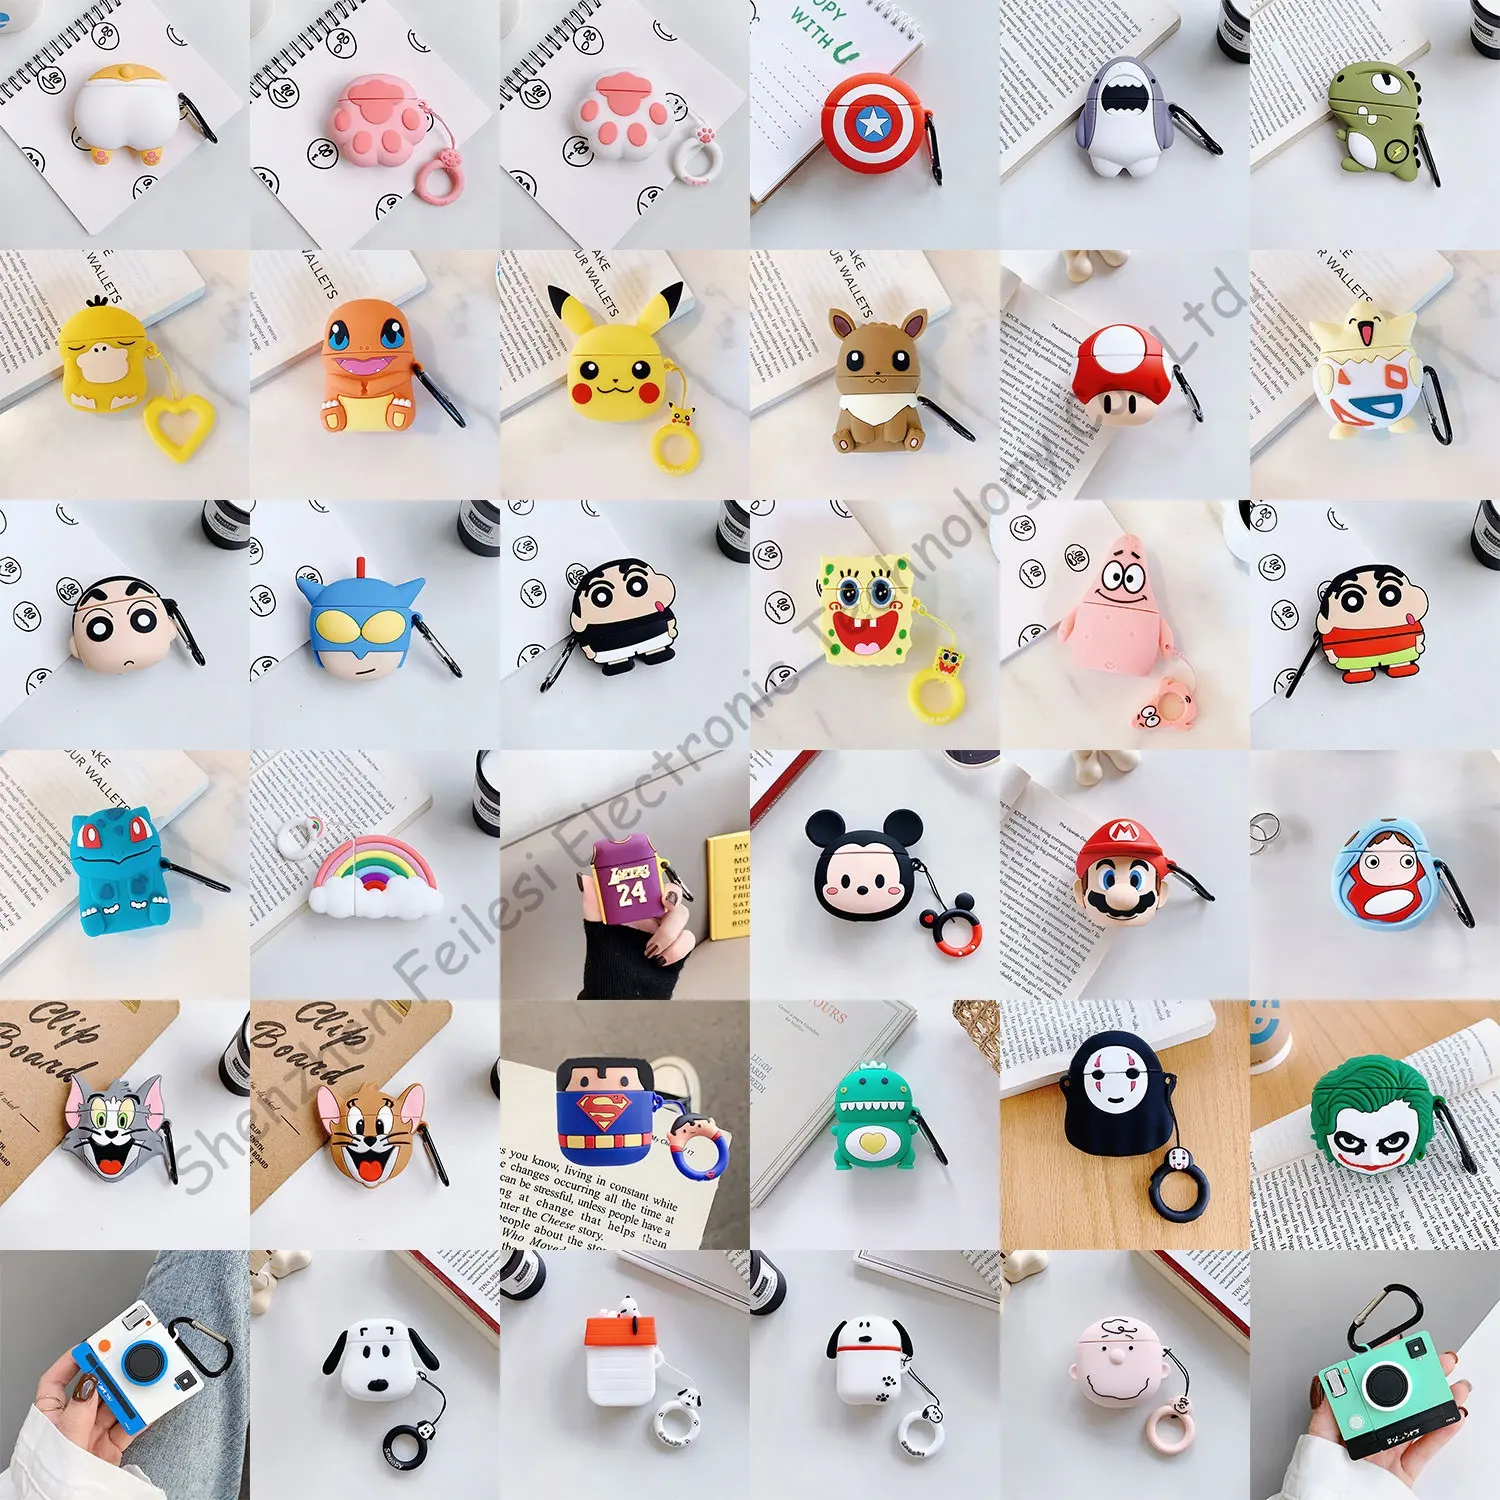 Original Designers Cute Cartoon 3D Silicone Case Earphone Accessories Character Designs Earphone Protect Case Cover